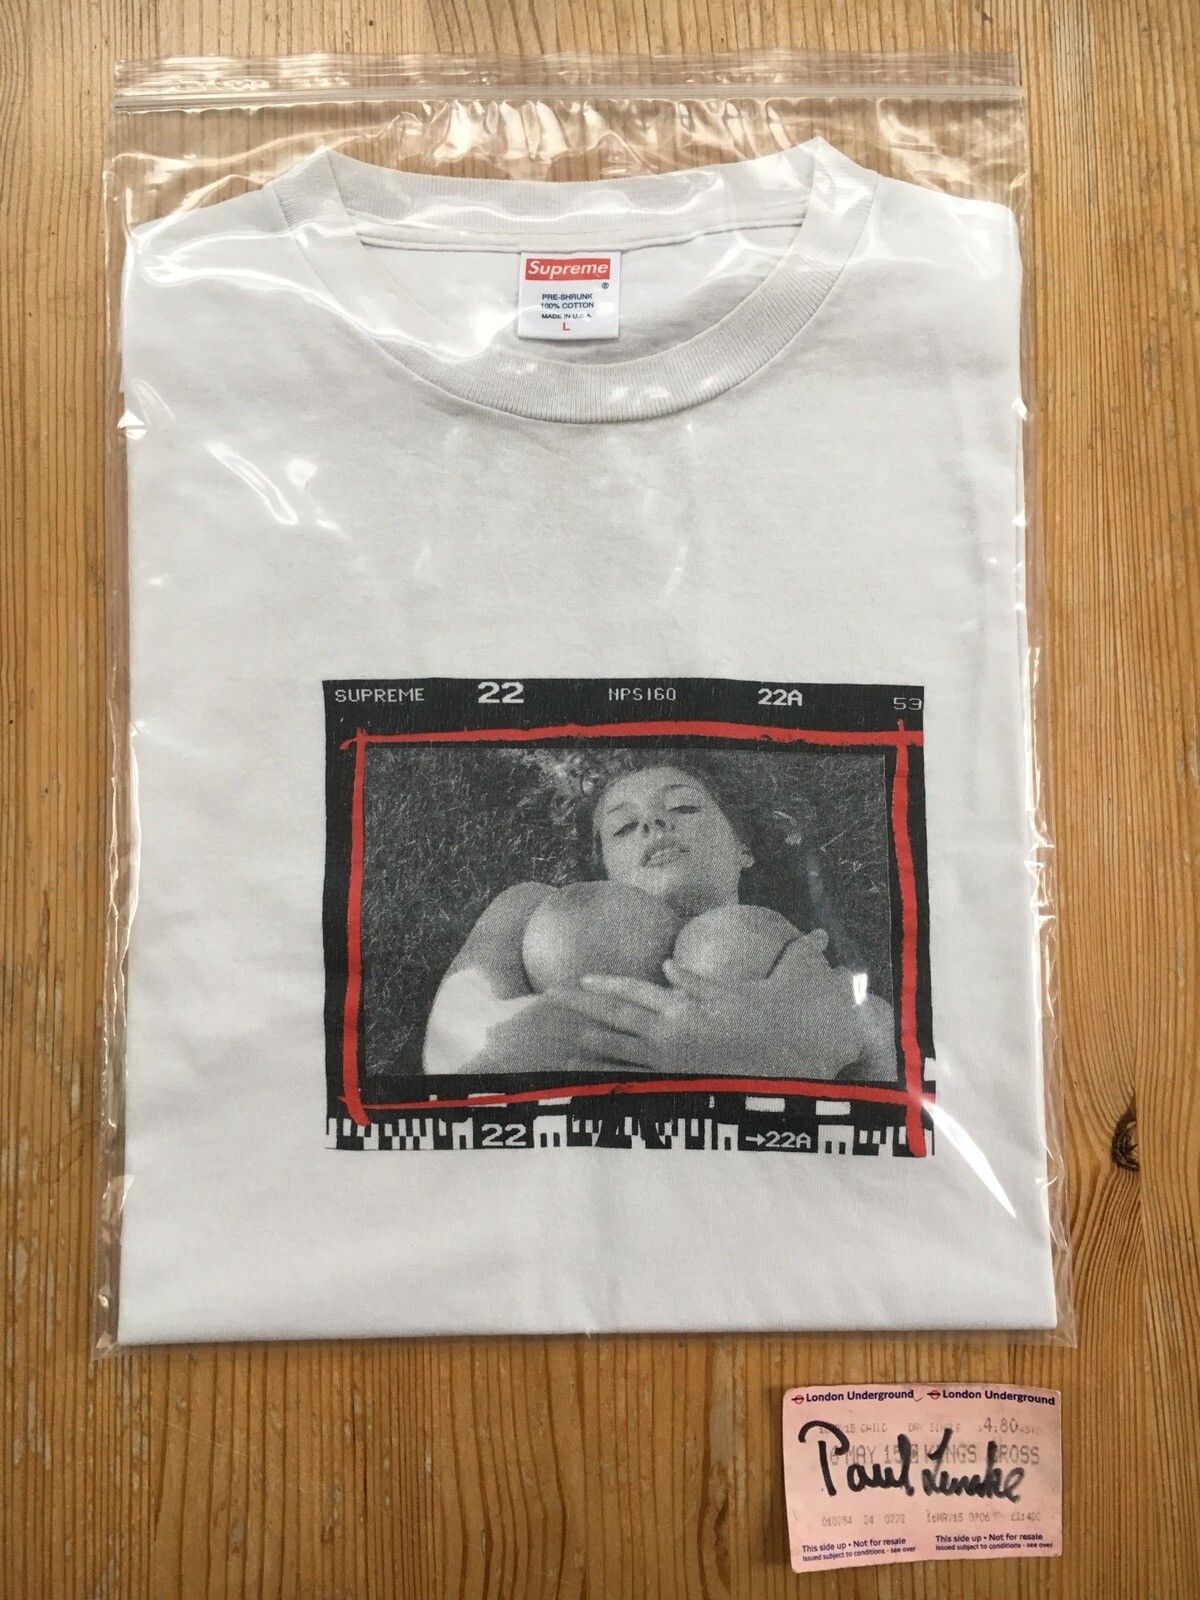 Supreme Terry Richardson Photo T-shirt 2003 Boobs | Grailed